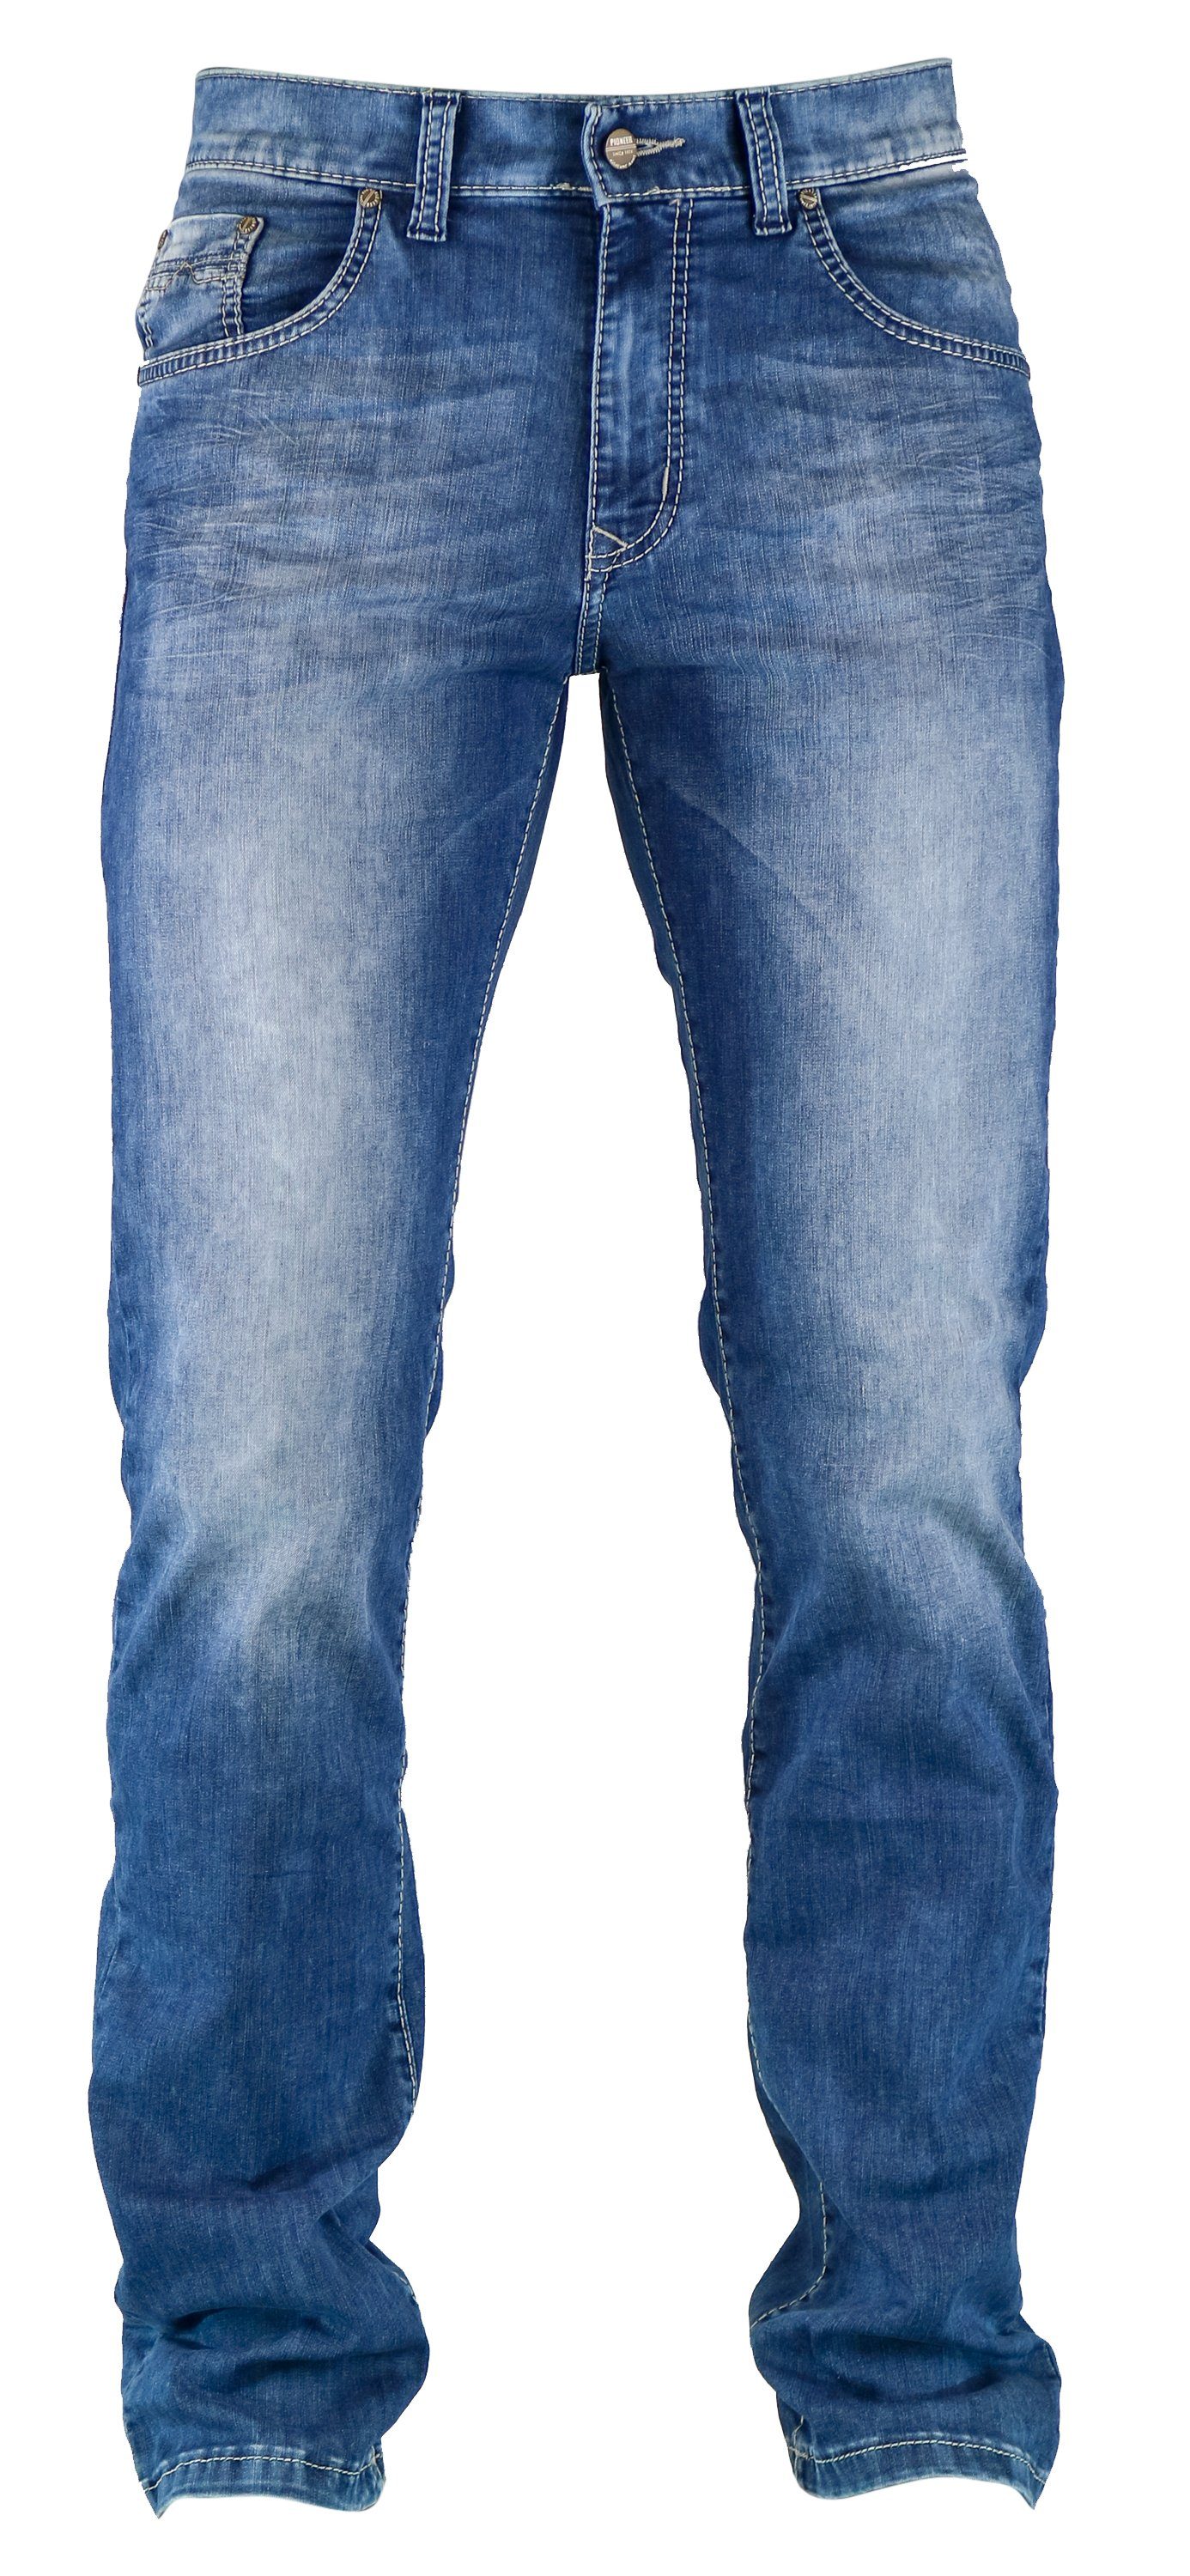 super blue Authentic Pioneer RANDO 9766.36 PIONEER 5-Pocket-Jeans - 1674 mid Jeans used